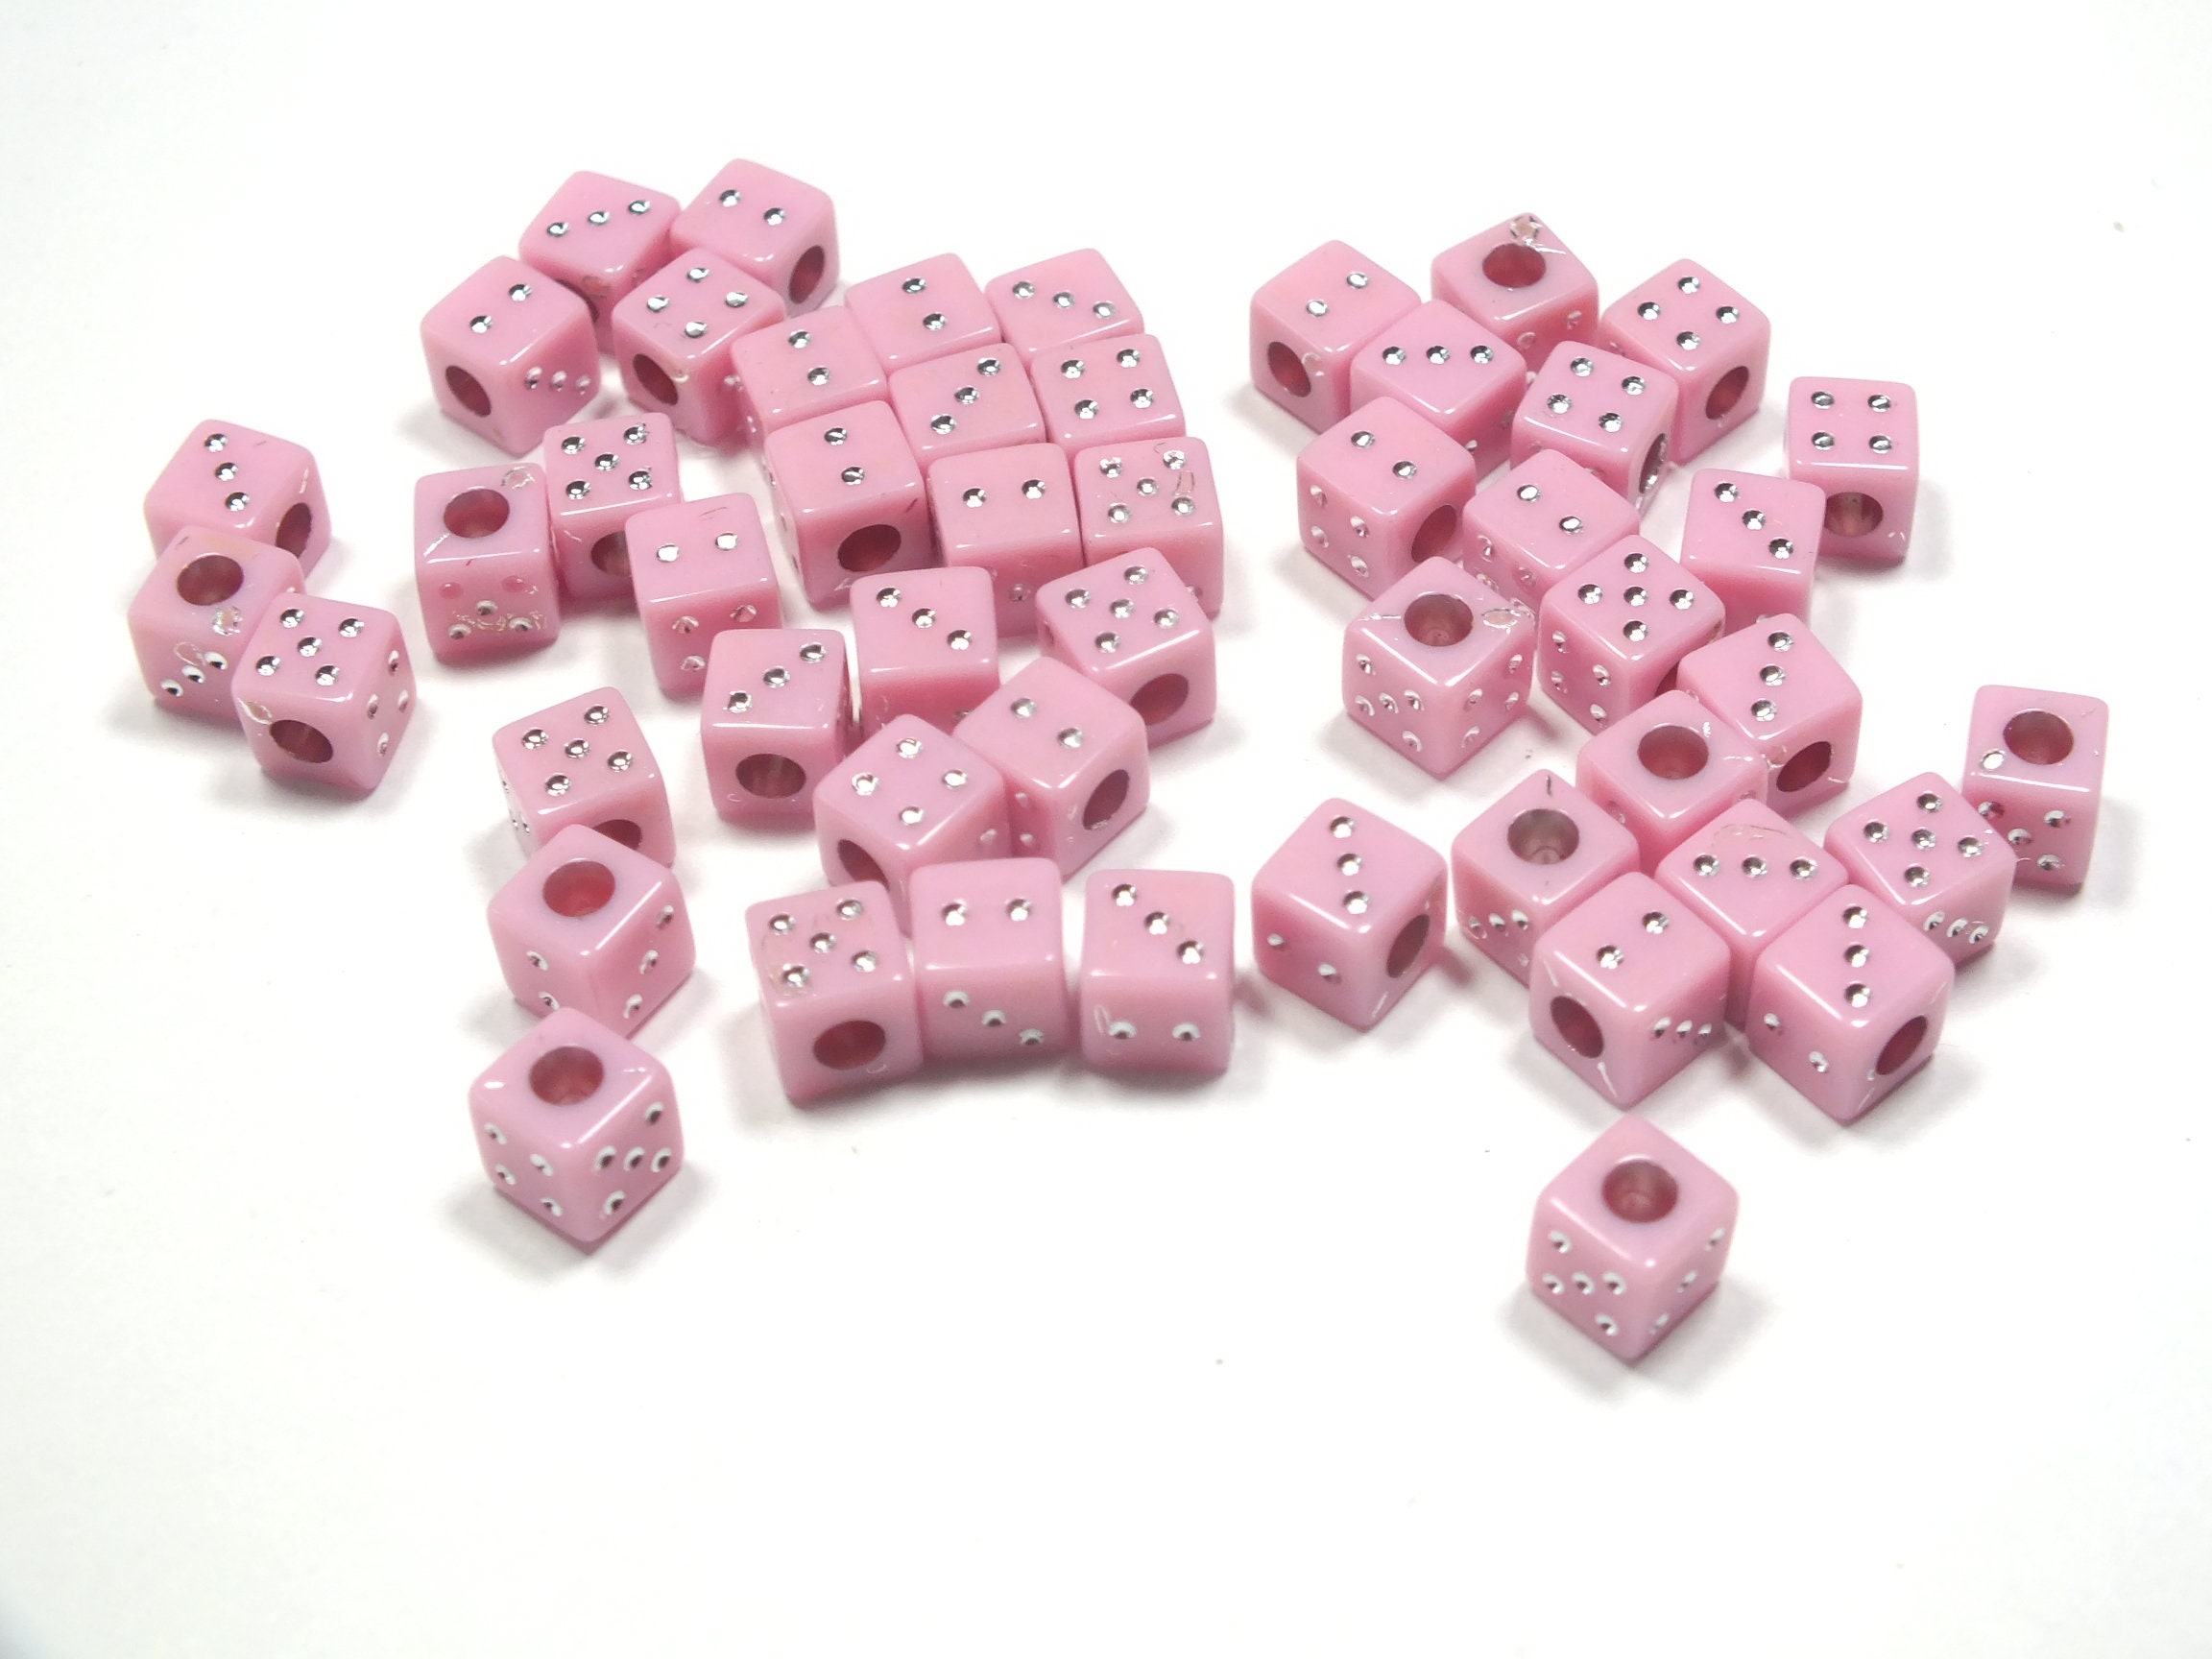 50 8mm Bright Pink Plastic Dice Beads